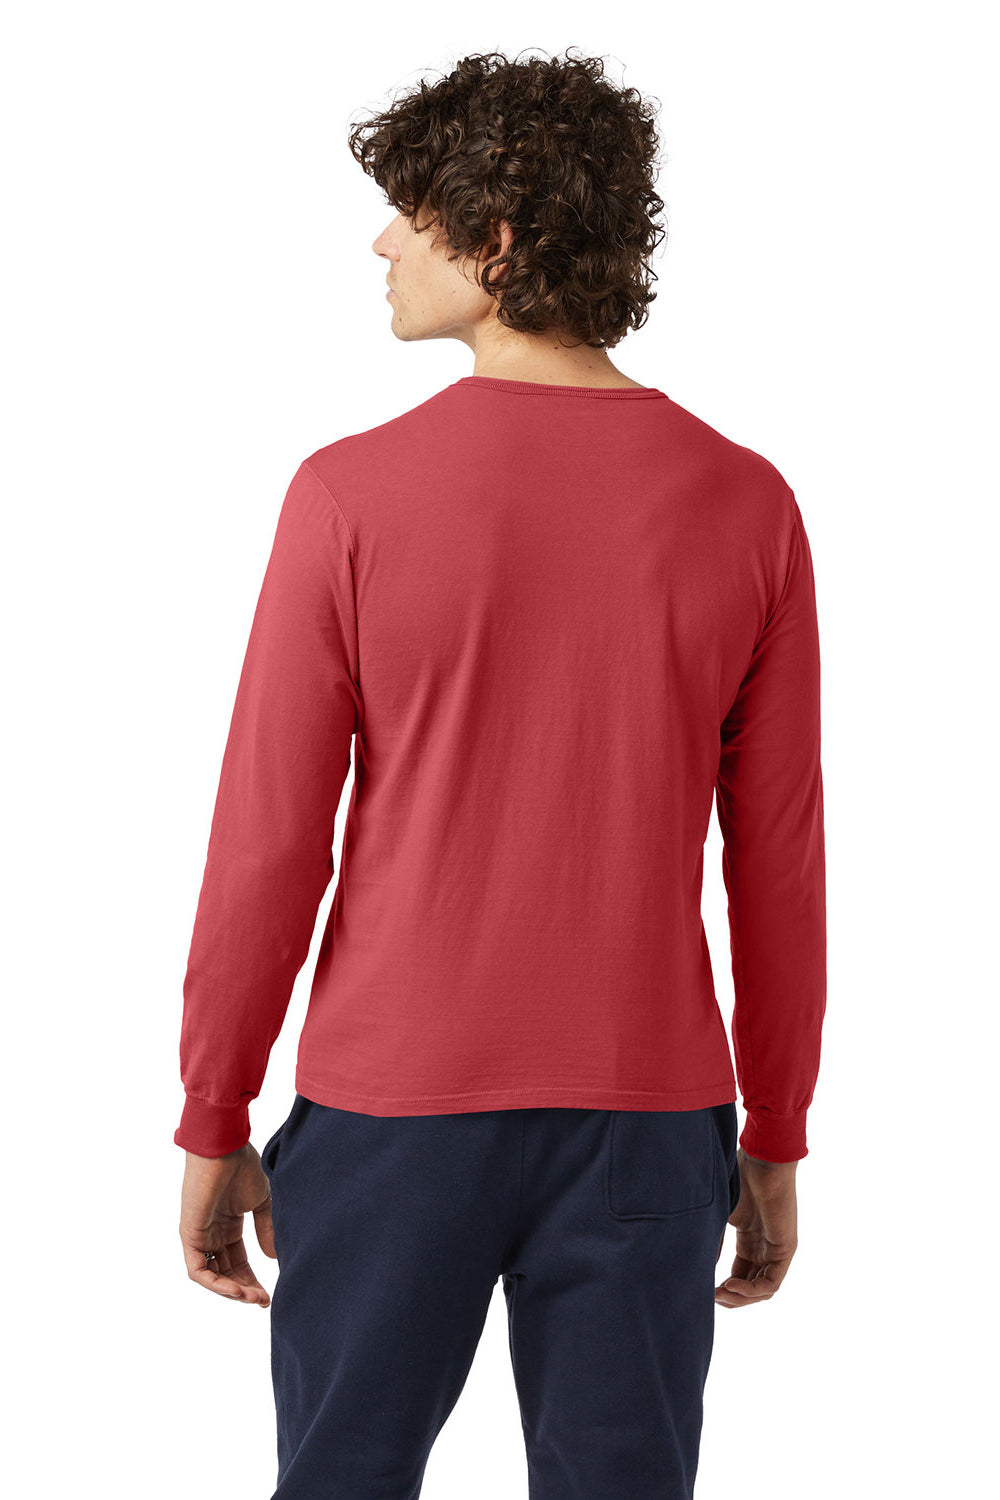 Champion CD200 Mens Garment Dyed Long Sleeve Crewneck T-Shirt Crimson Red Model Back